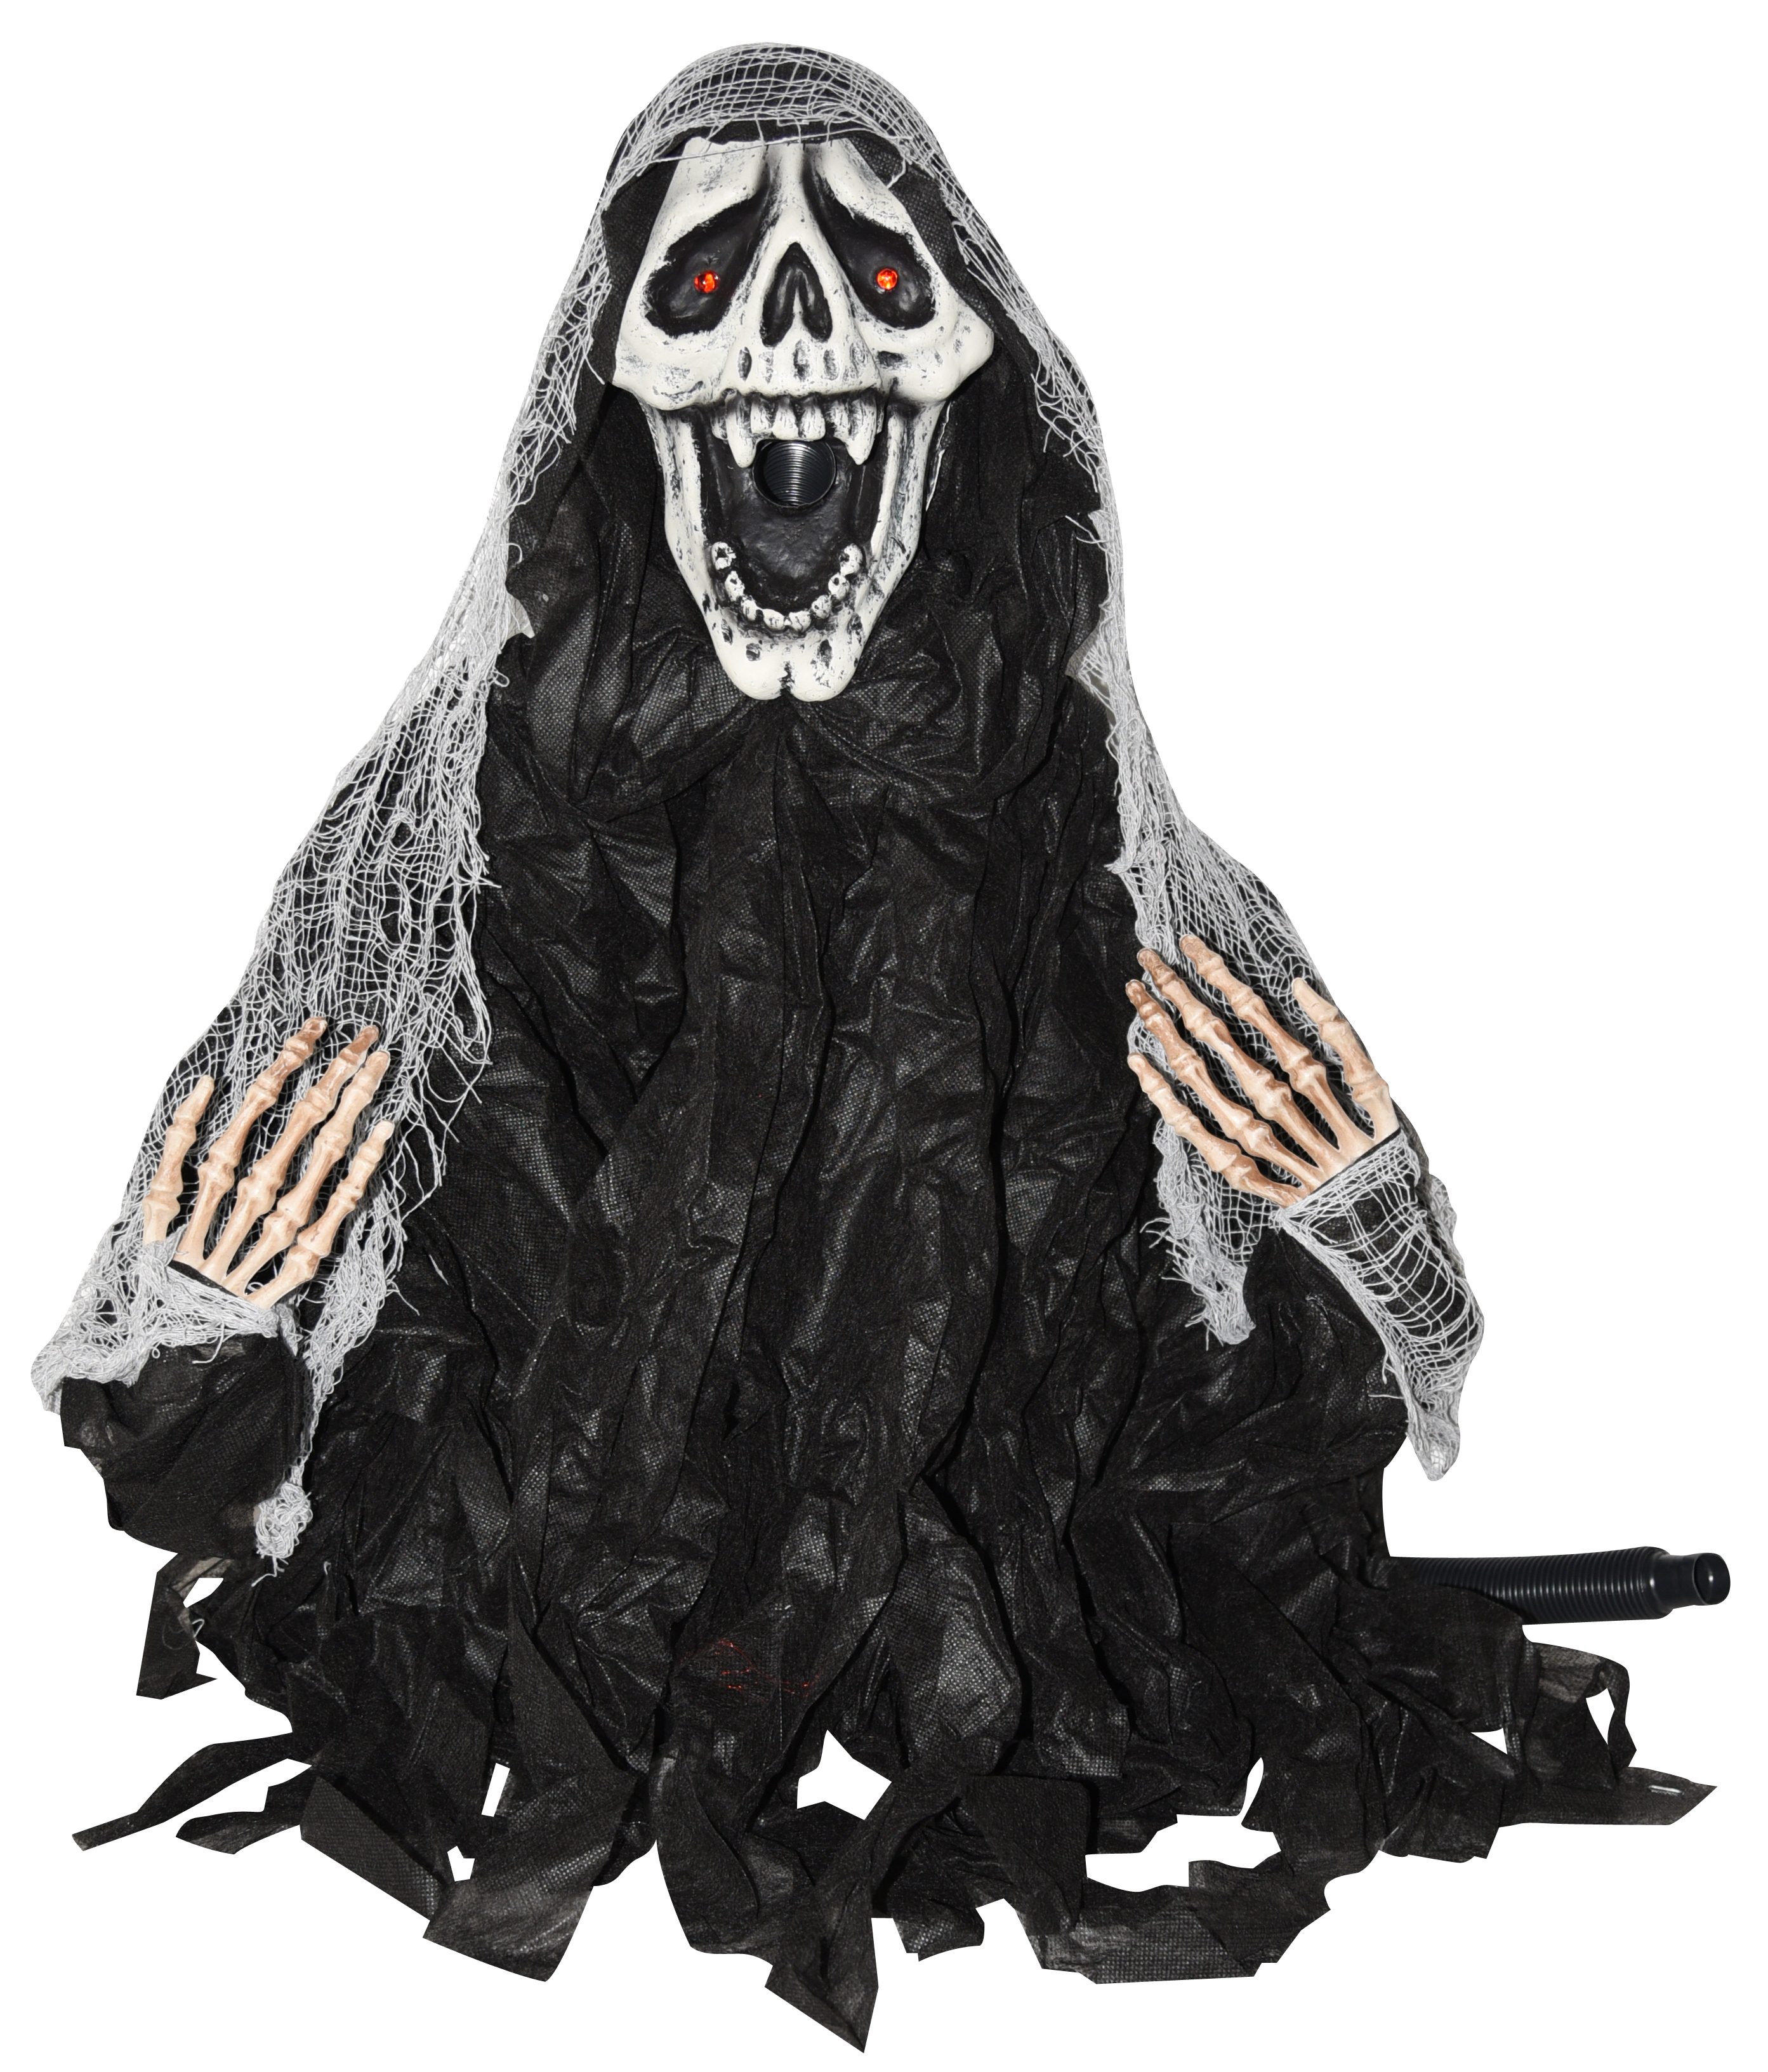 Fogging Reaper Halloween Decoration - image 2 of 2